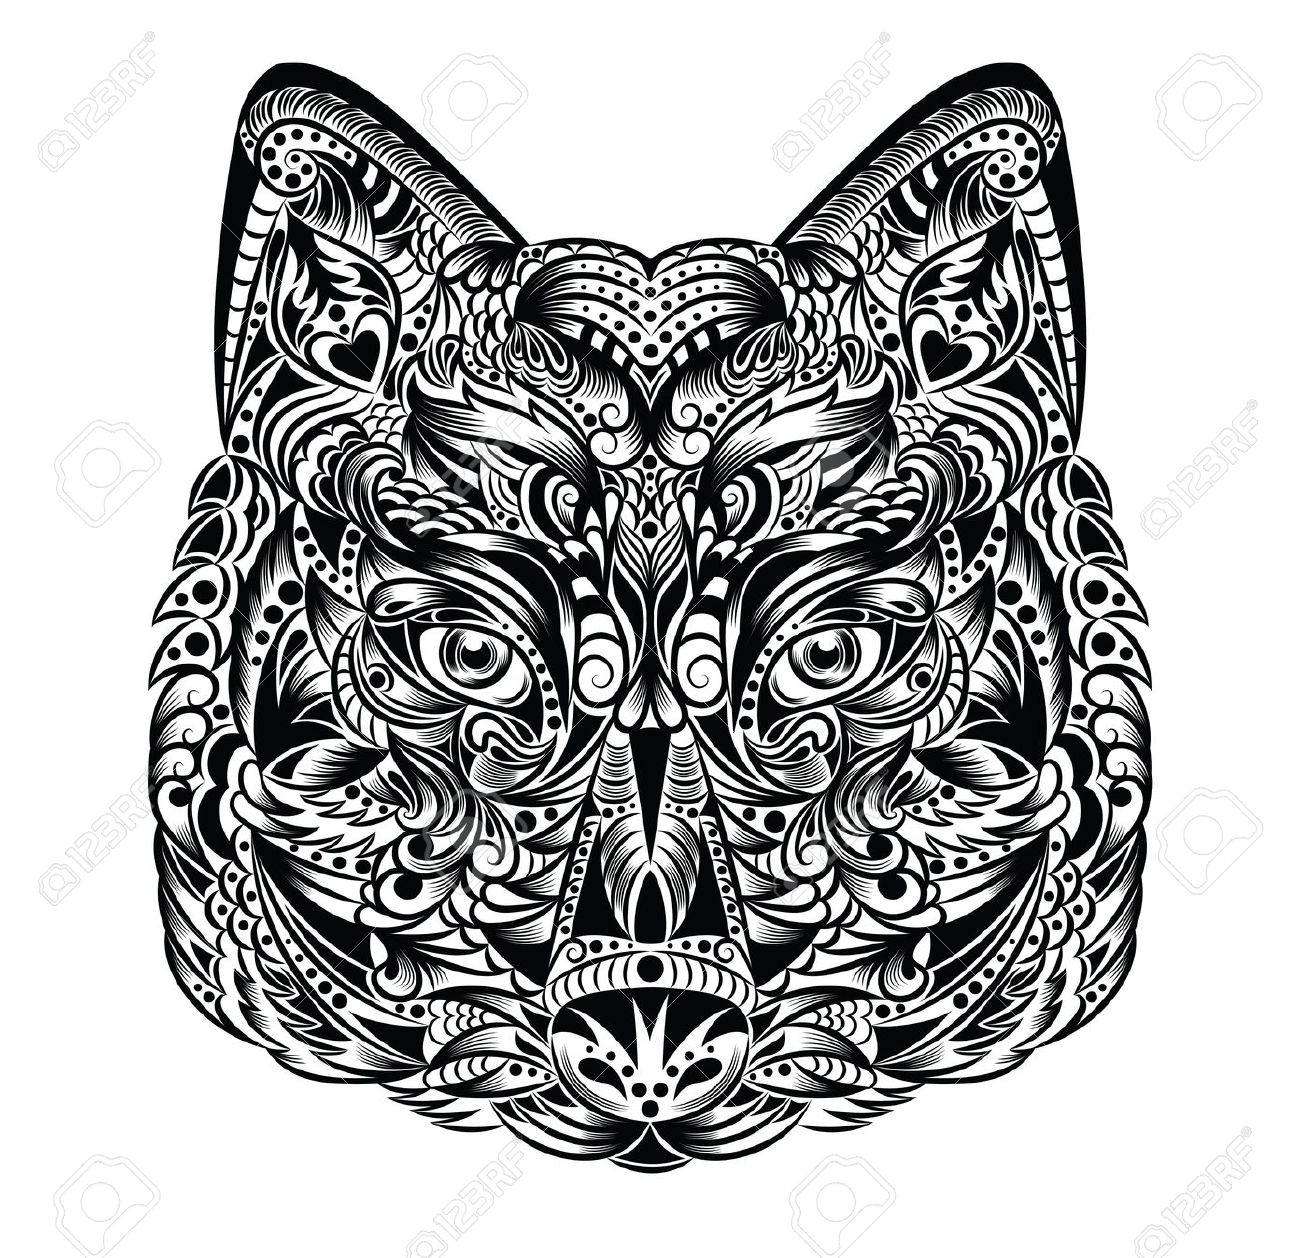 Impressive wolf head with original pattern tattoo design